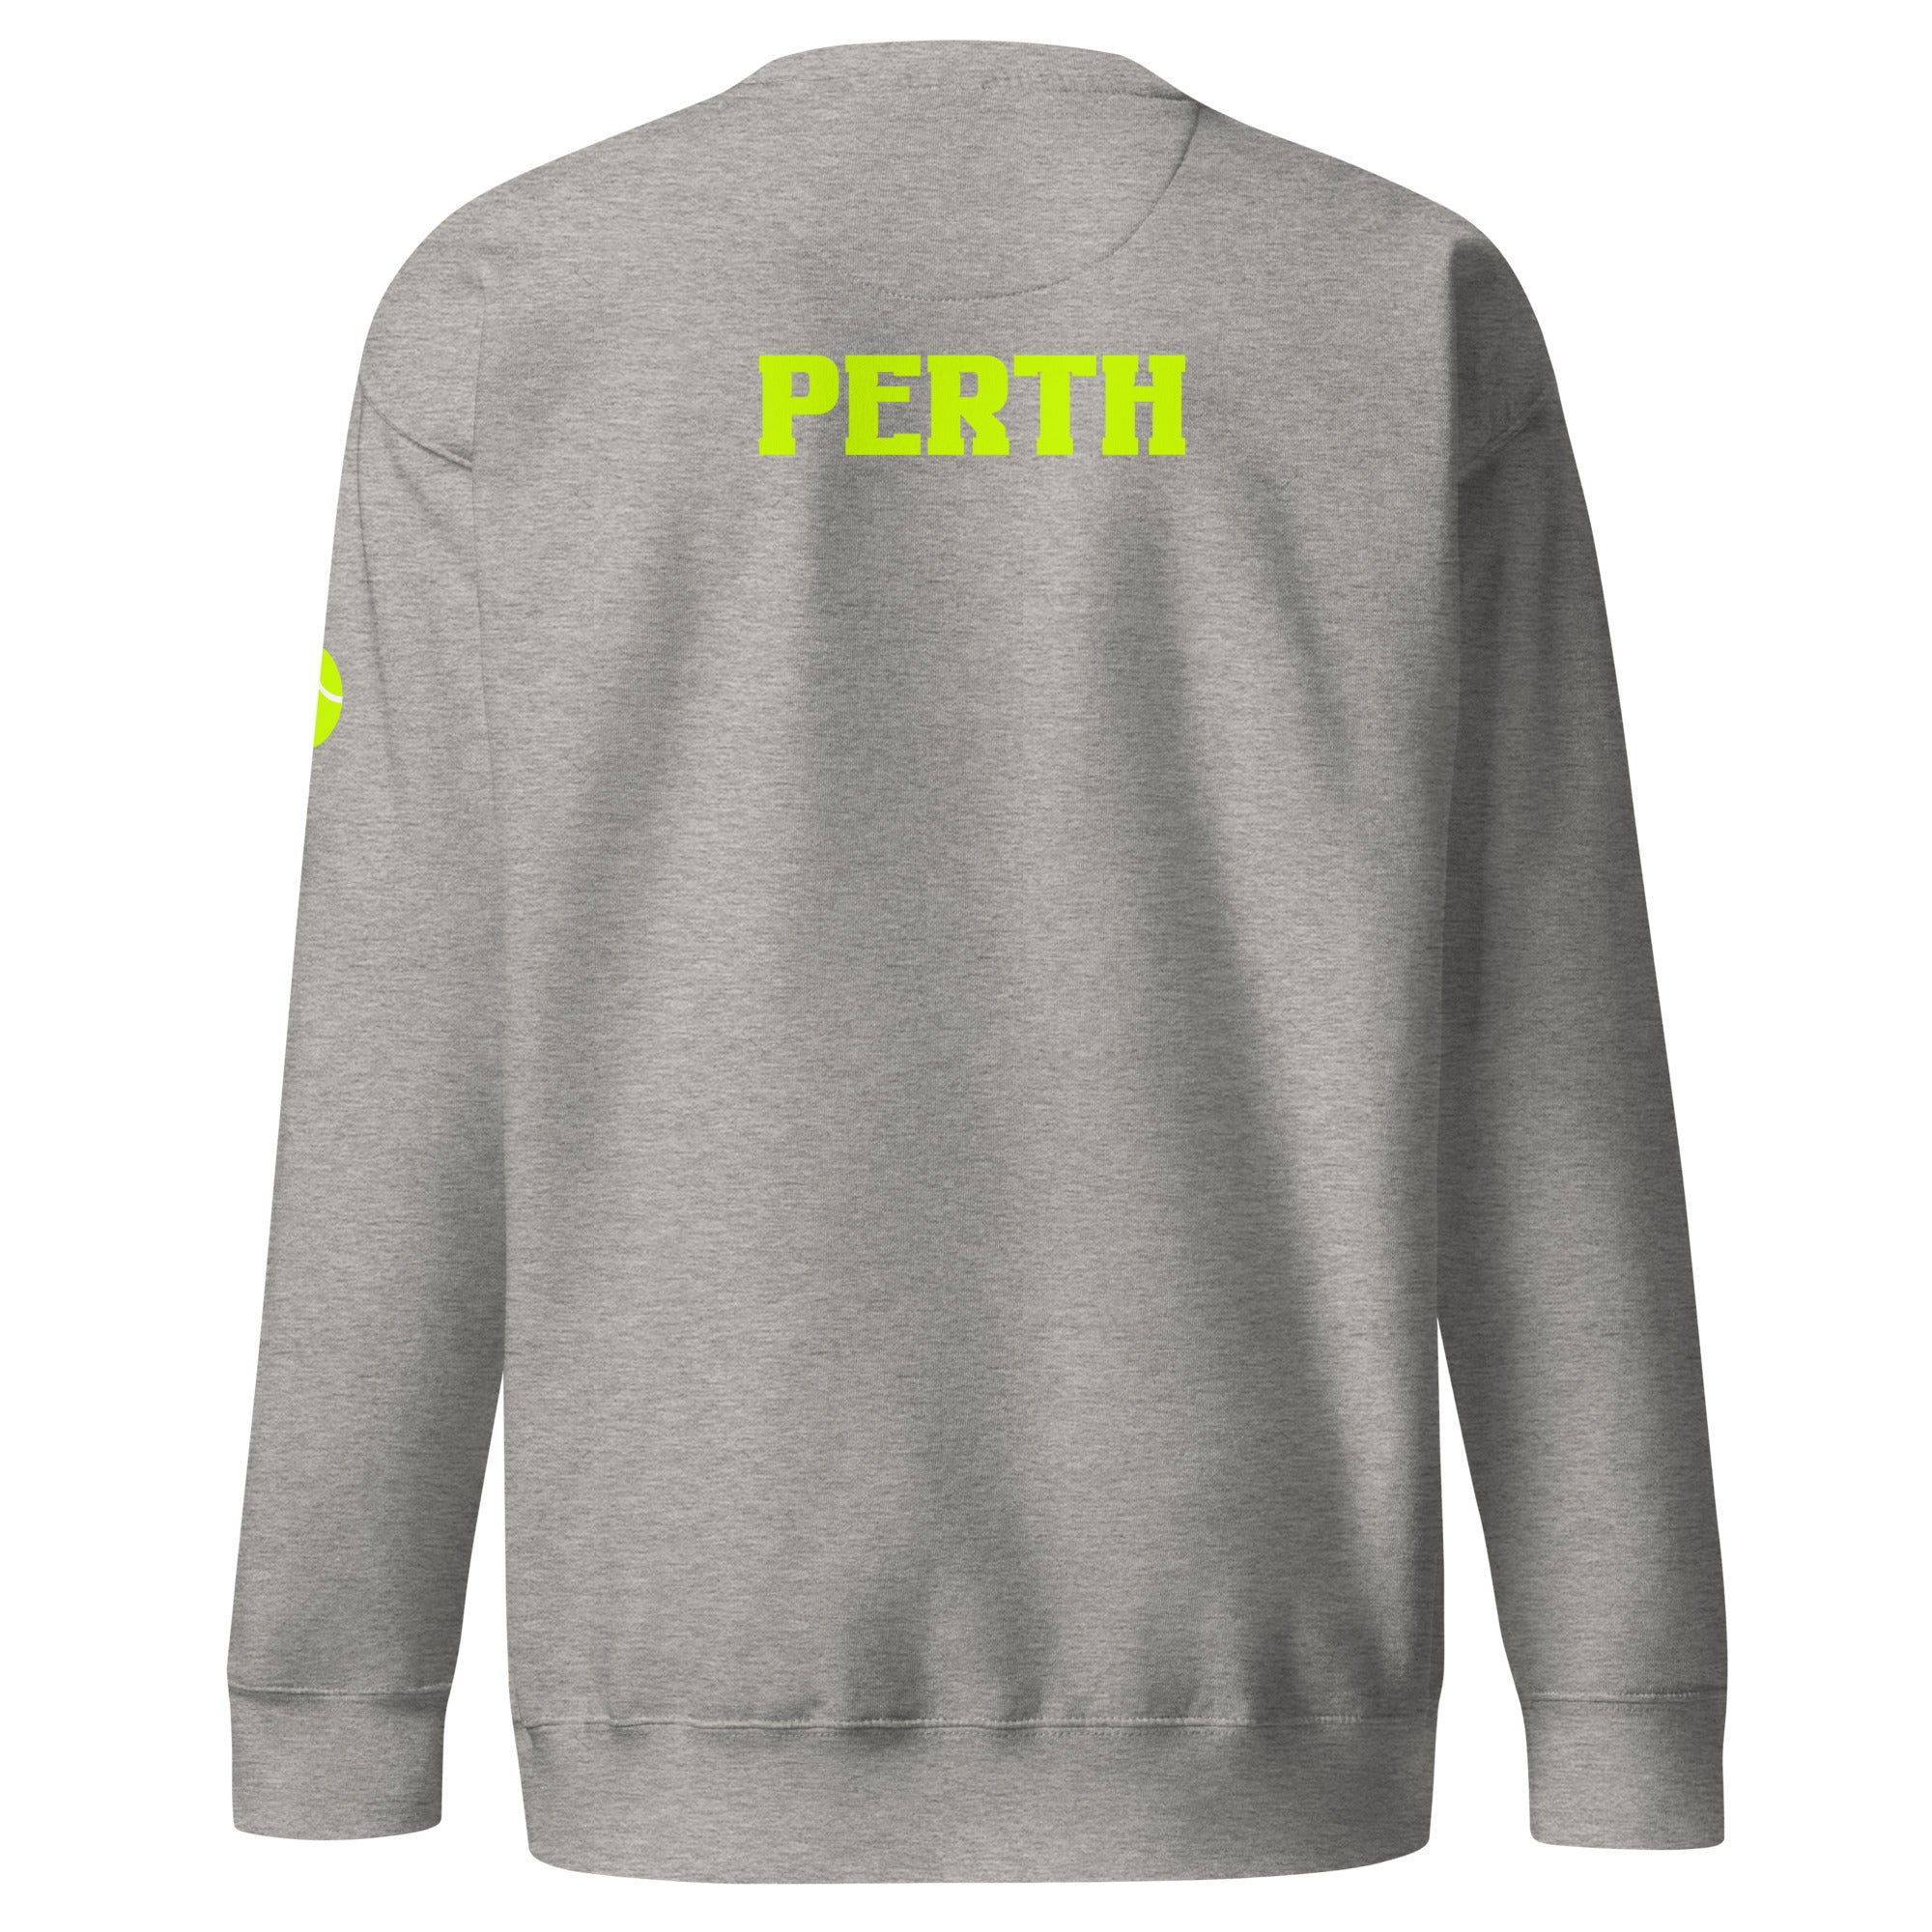 Unisex Premium Sweatshirt - Tennis Masters Perth - GRAPHIC T-SHIRTS